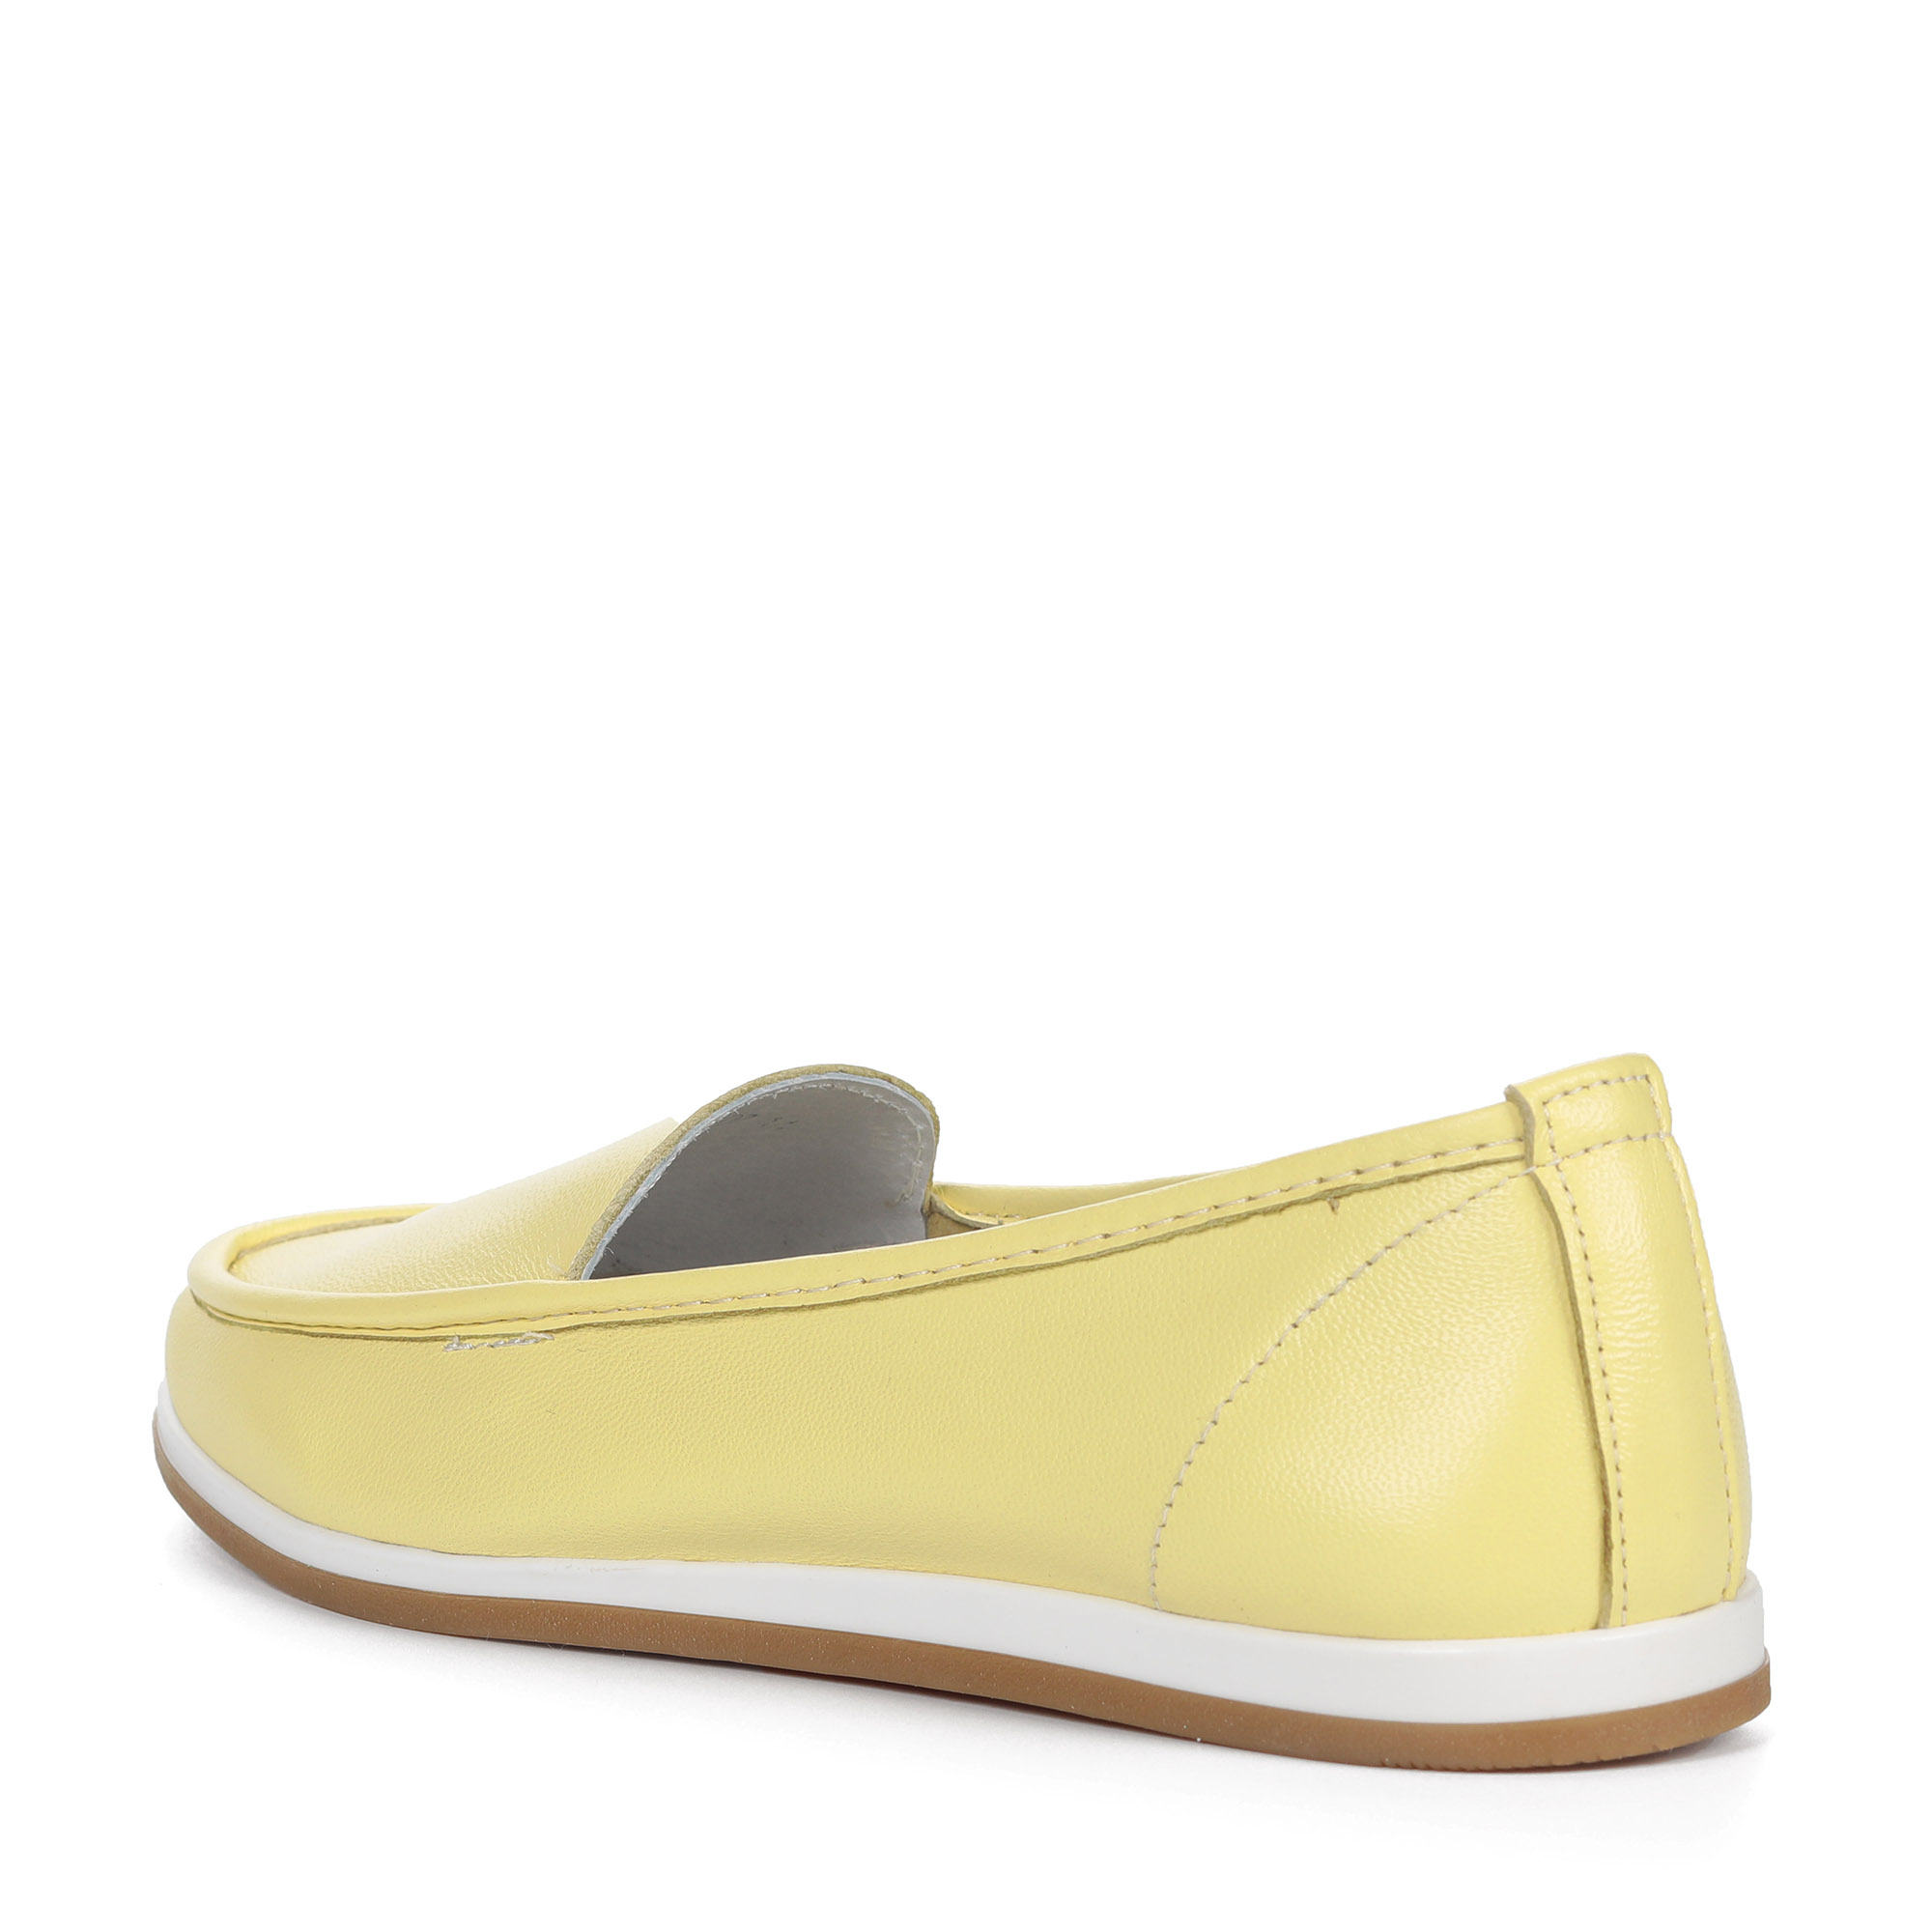 Желтые мокасины из кожи от Respect-shoes